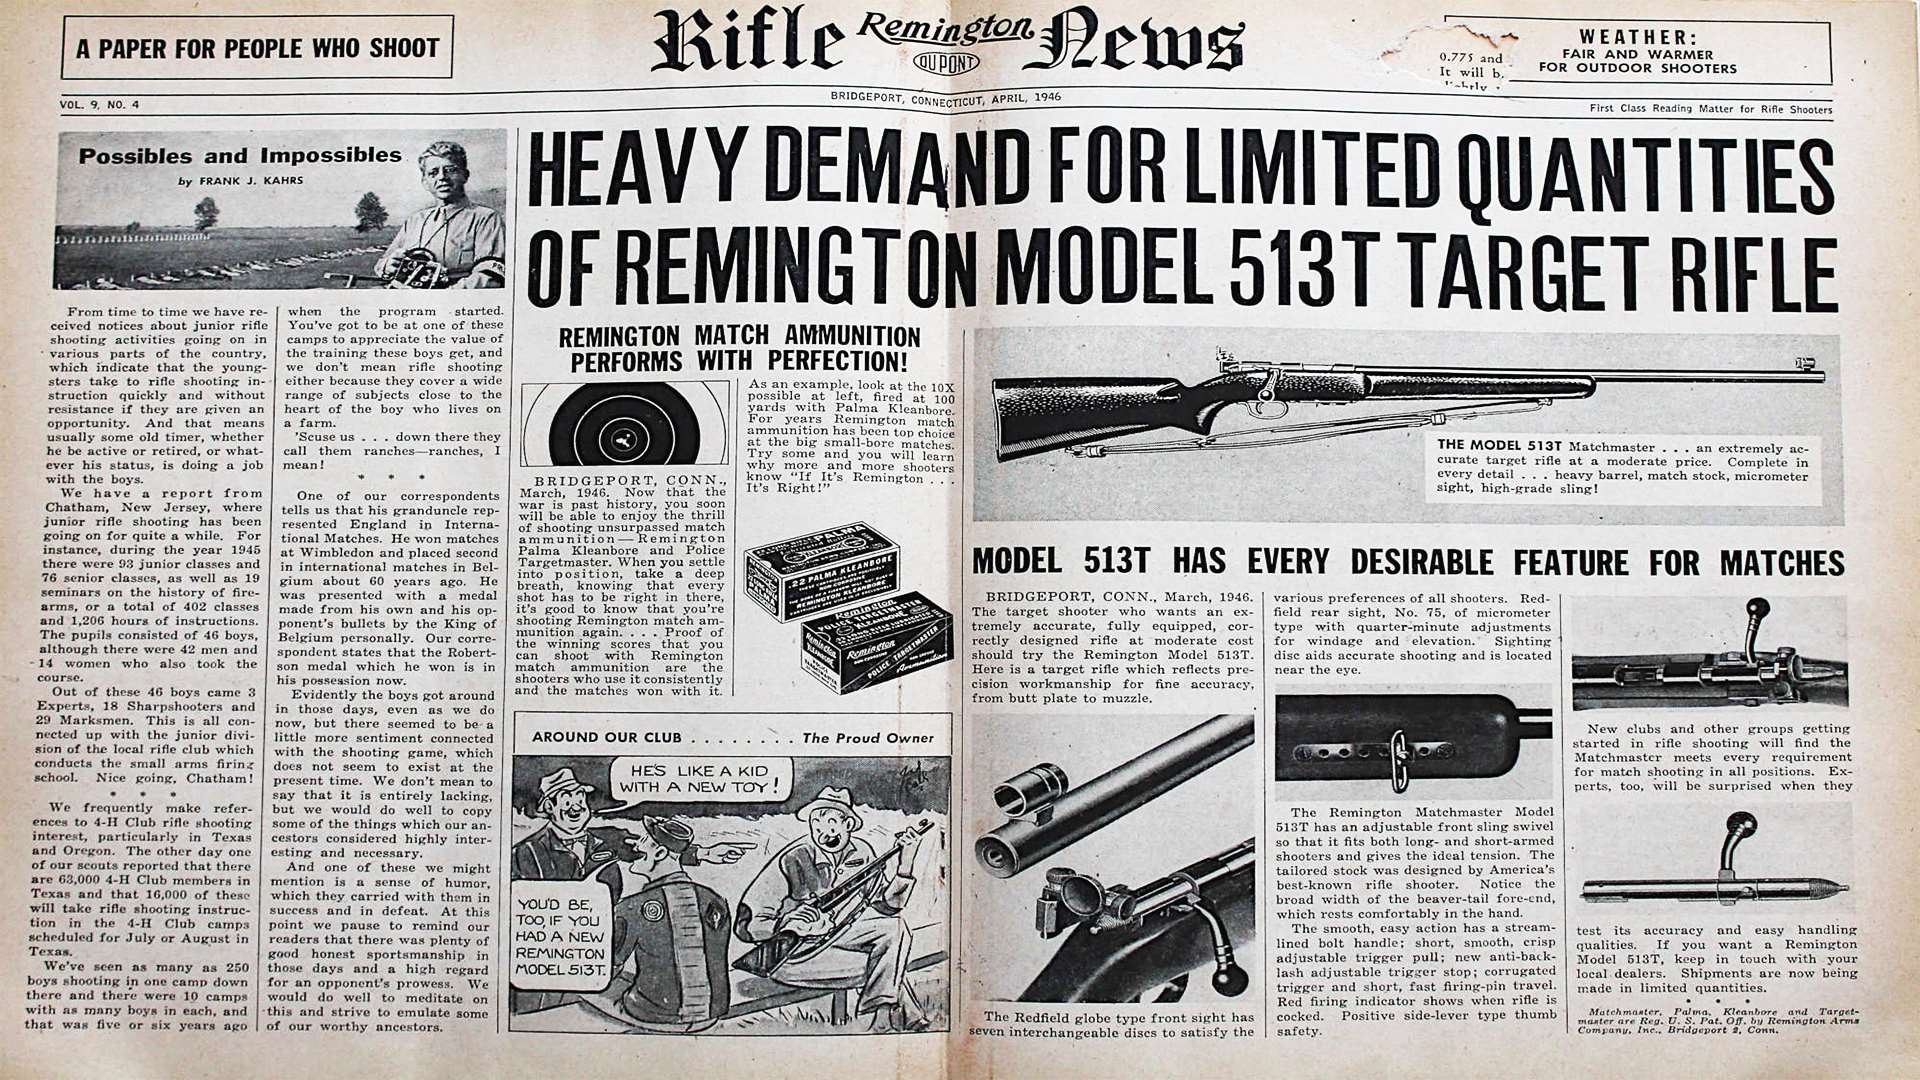 Remington ad in April 1946 American Rifleman